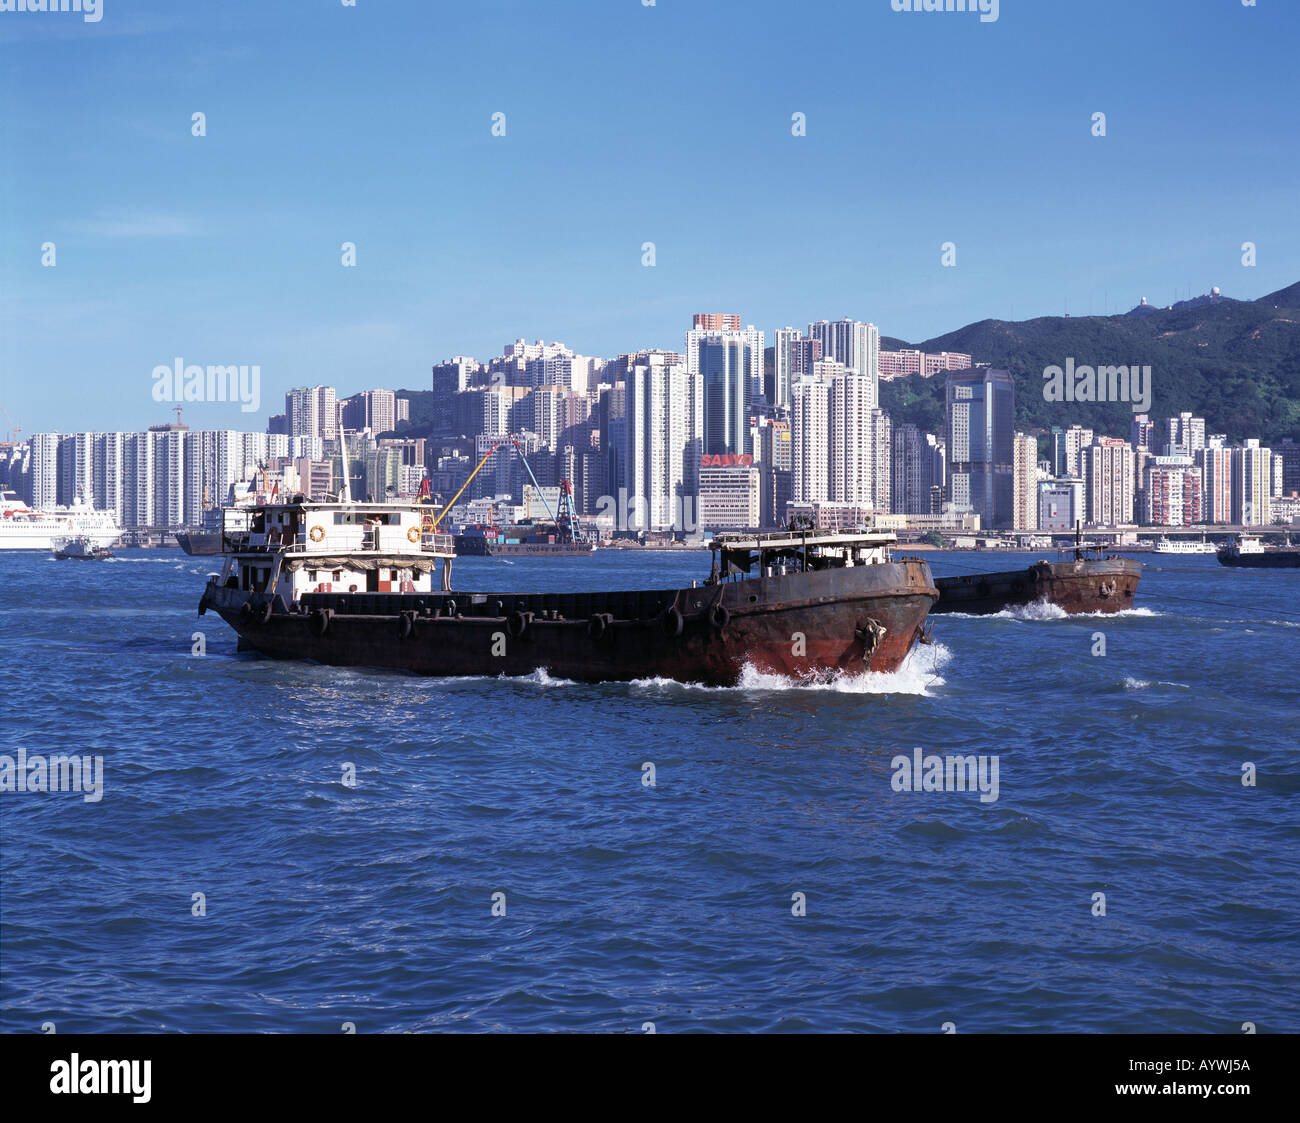 Hafen, Schiffsverkehr, Frachtschiffe, Wolkenkratzer-Skyline Causeway Bay, Hong Kong Insel, Hongkong Stock Photo